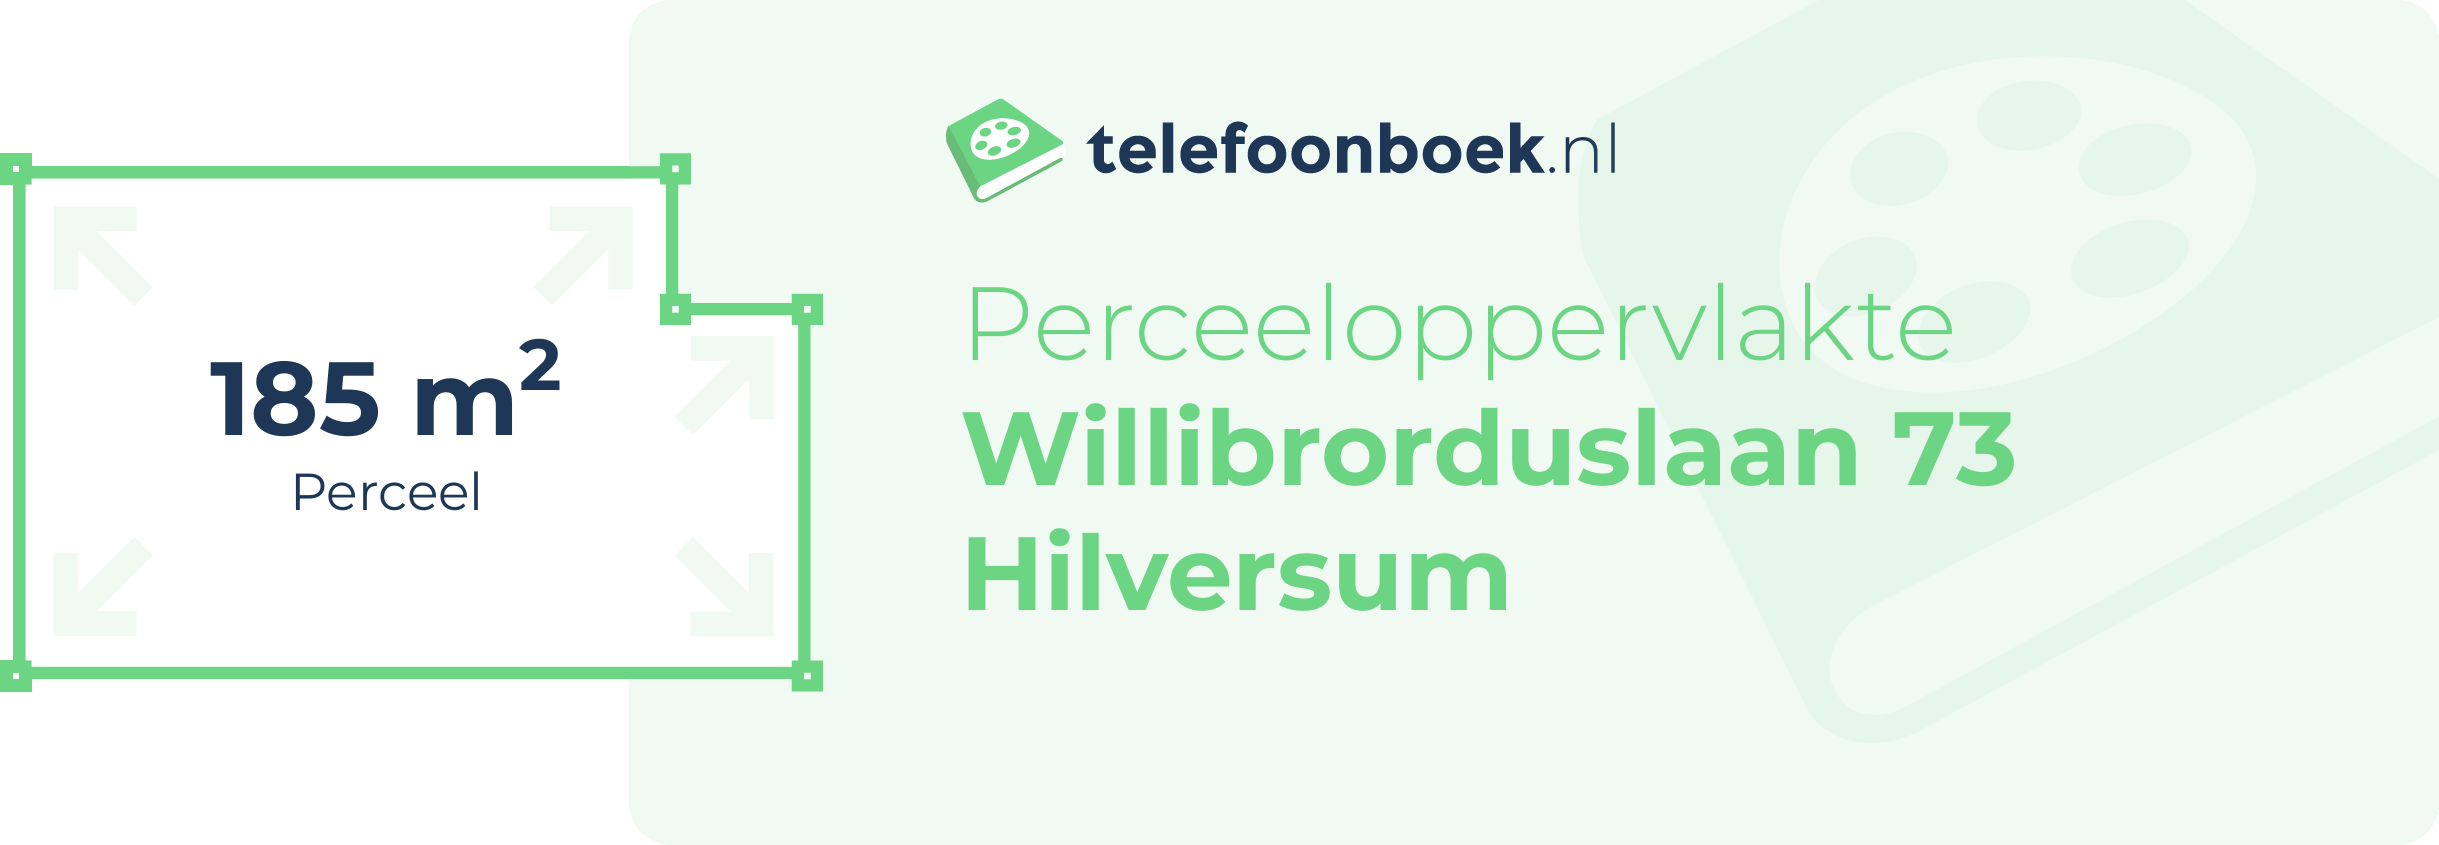 Perceeloppervlakte Willibrorduslaan 73 Hilversum